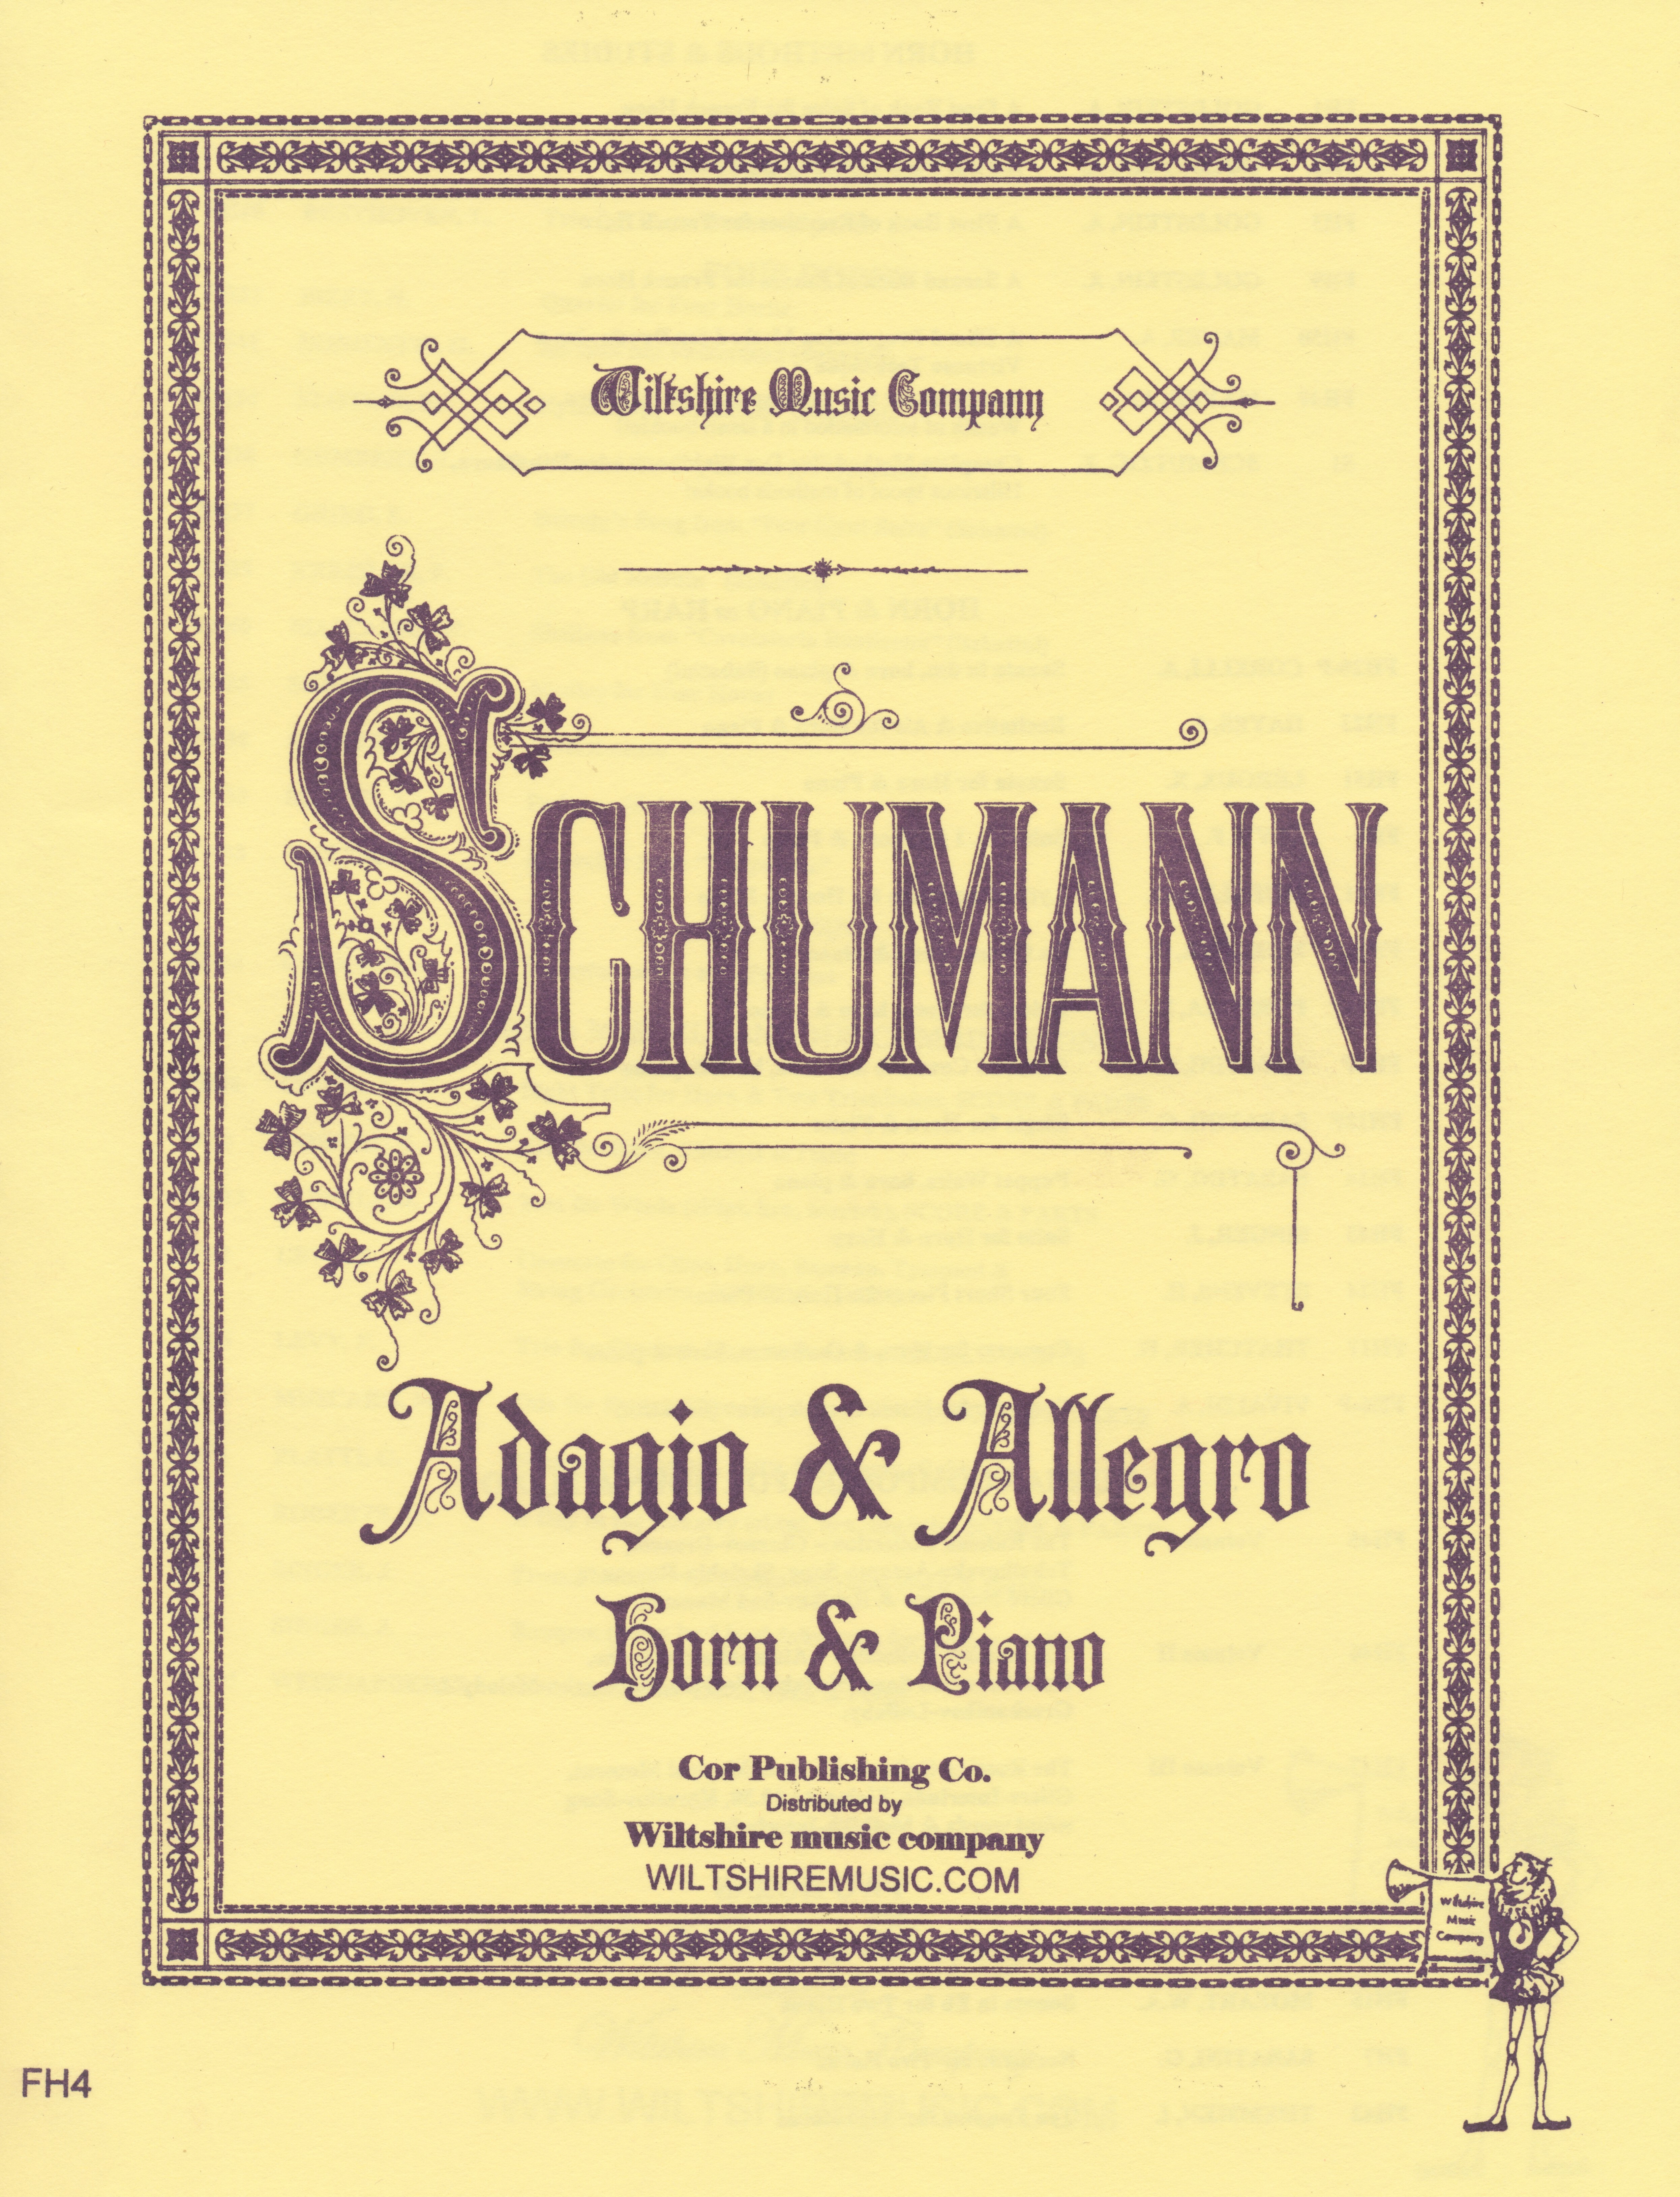 Adagio & Allegro, Schumann, horn & piano